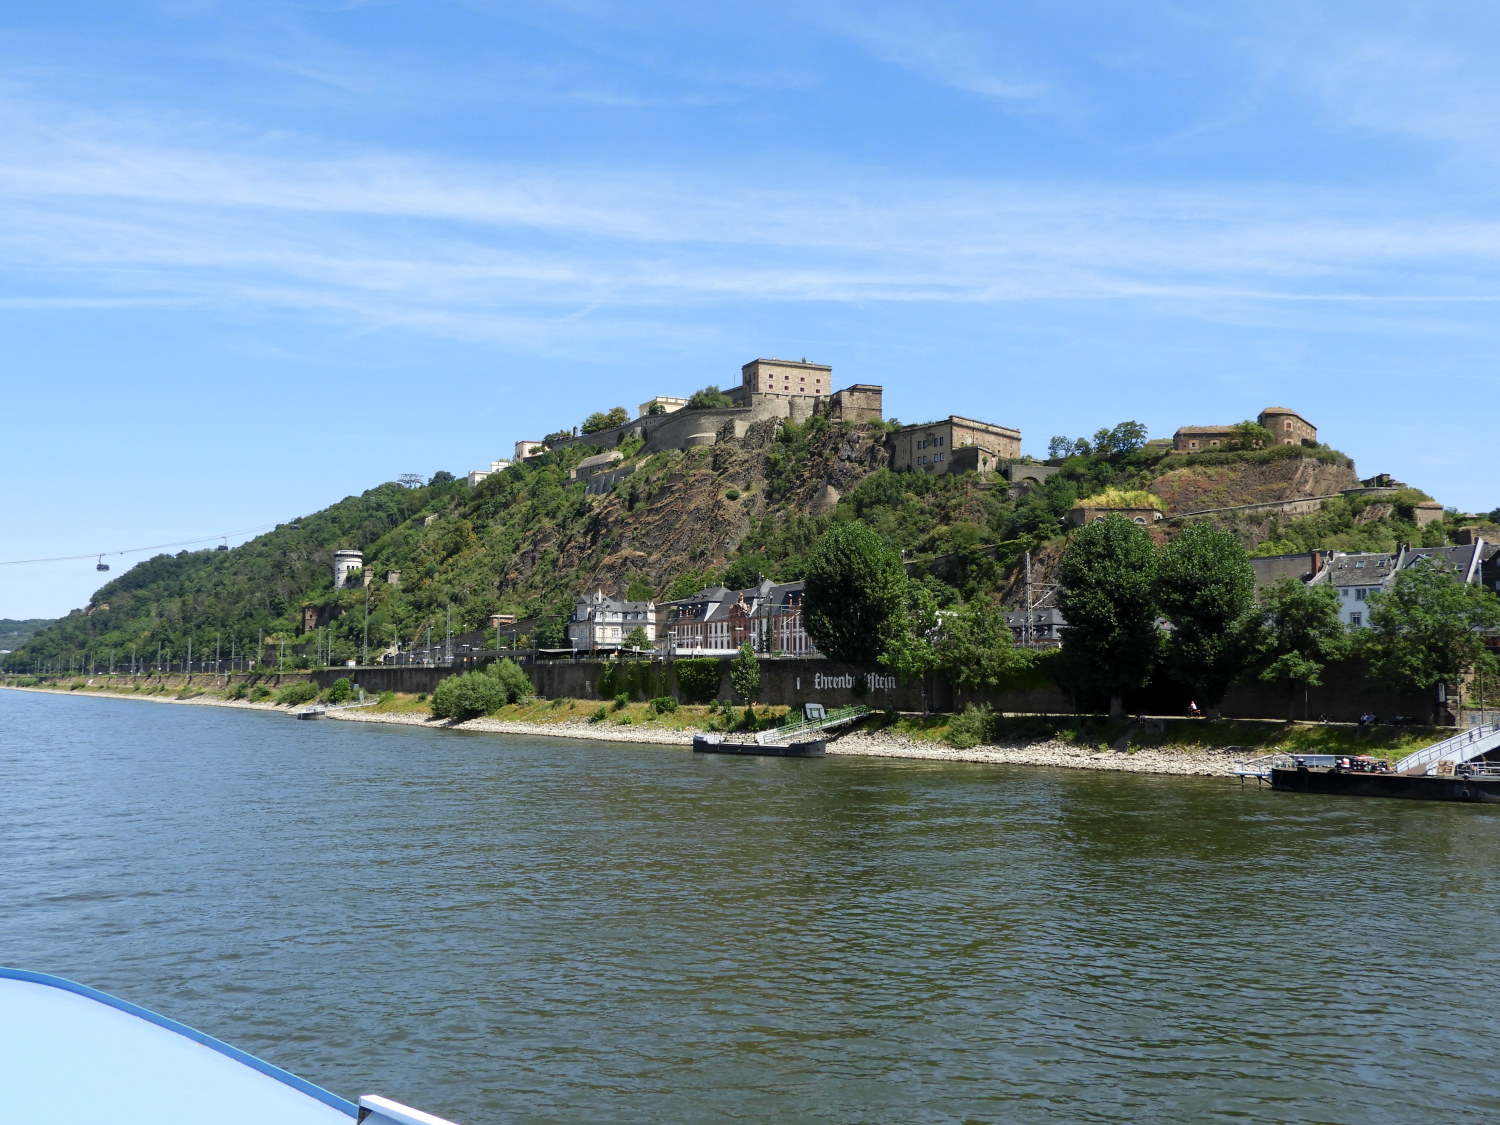 View across the Rhine to Ehrenbreitstein Fortress